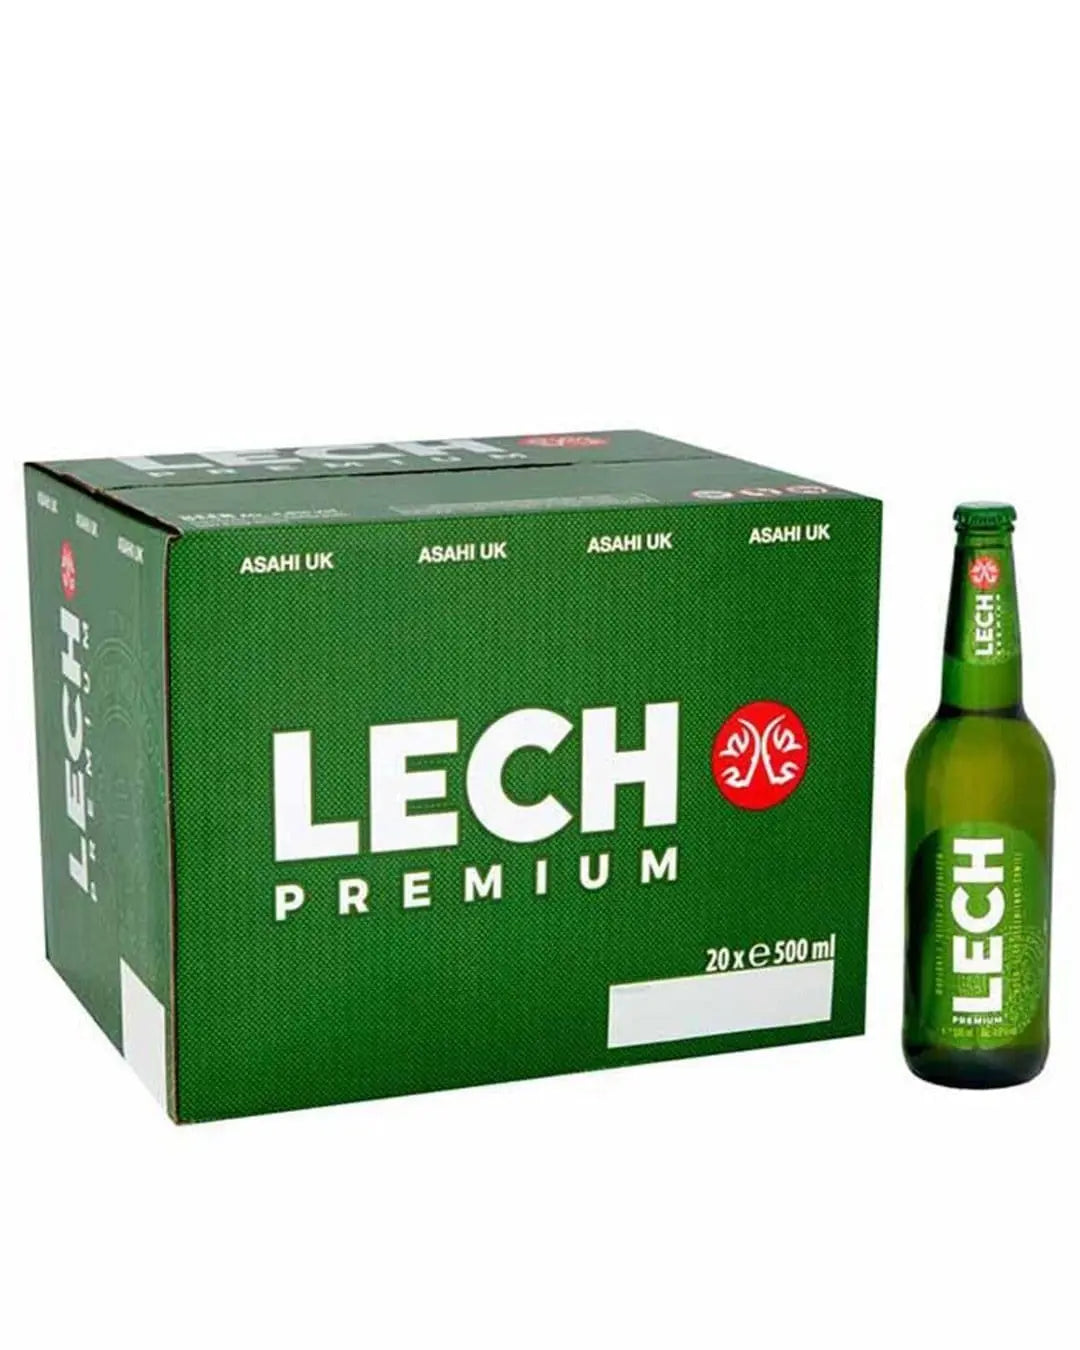 Lech Premium Lager Beer Bottle Multipack, 20 x 500 ml Beer